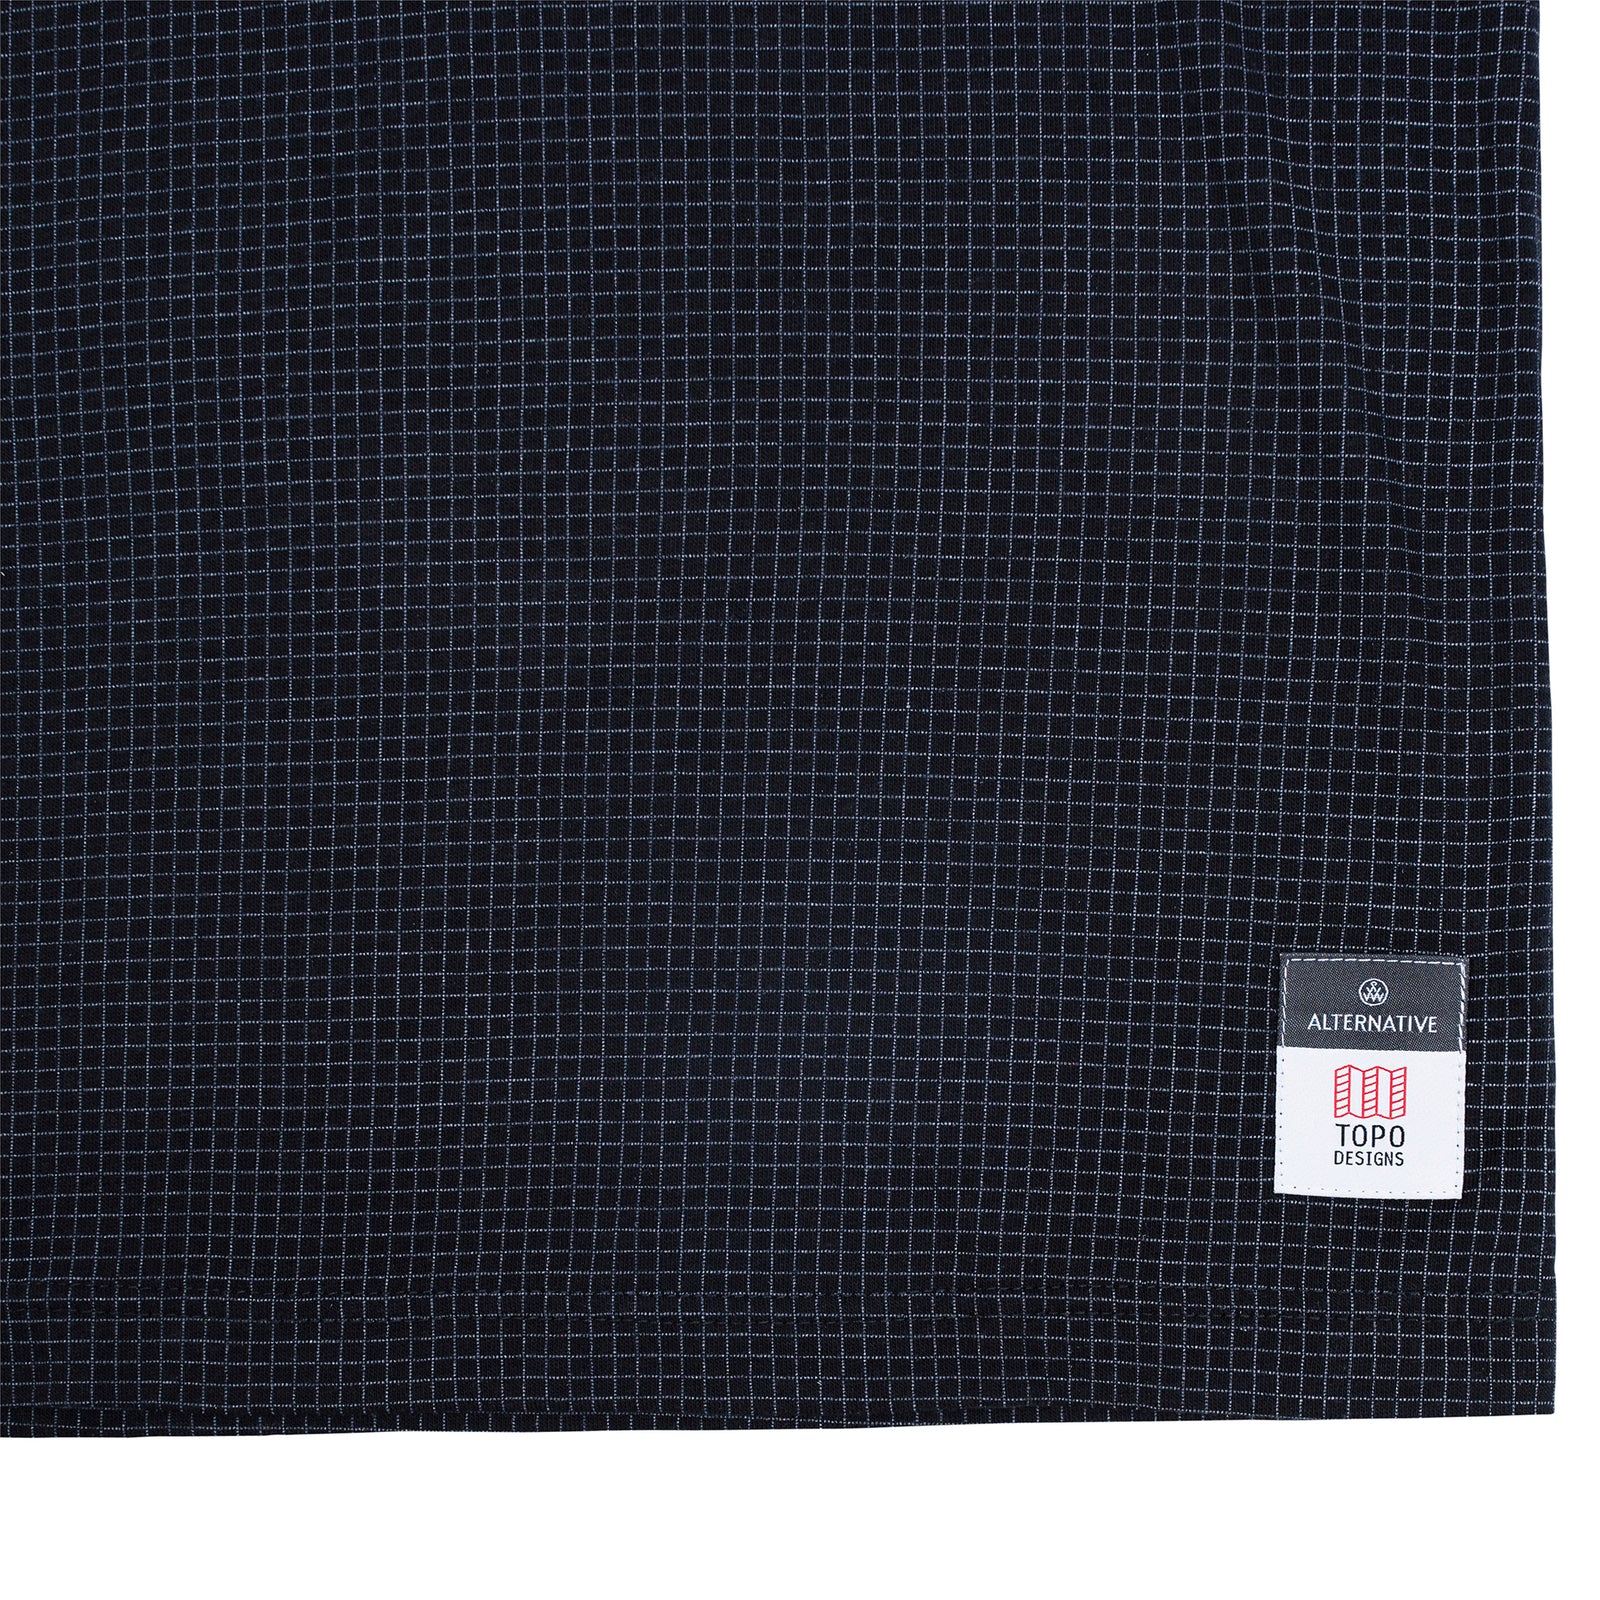 Detail shot of Topo Designs x Alternative Eco-Jersey Crew Tee in true black grid showing tag along bottom hem.